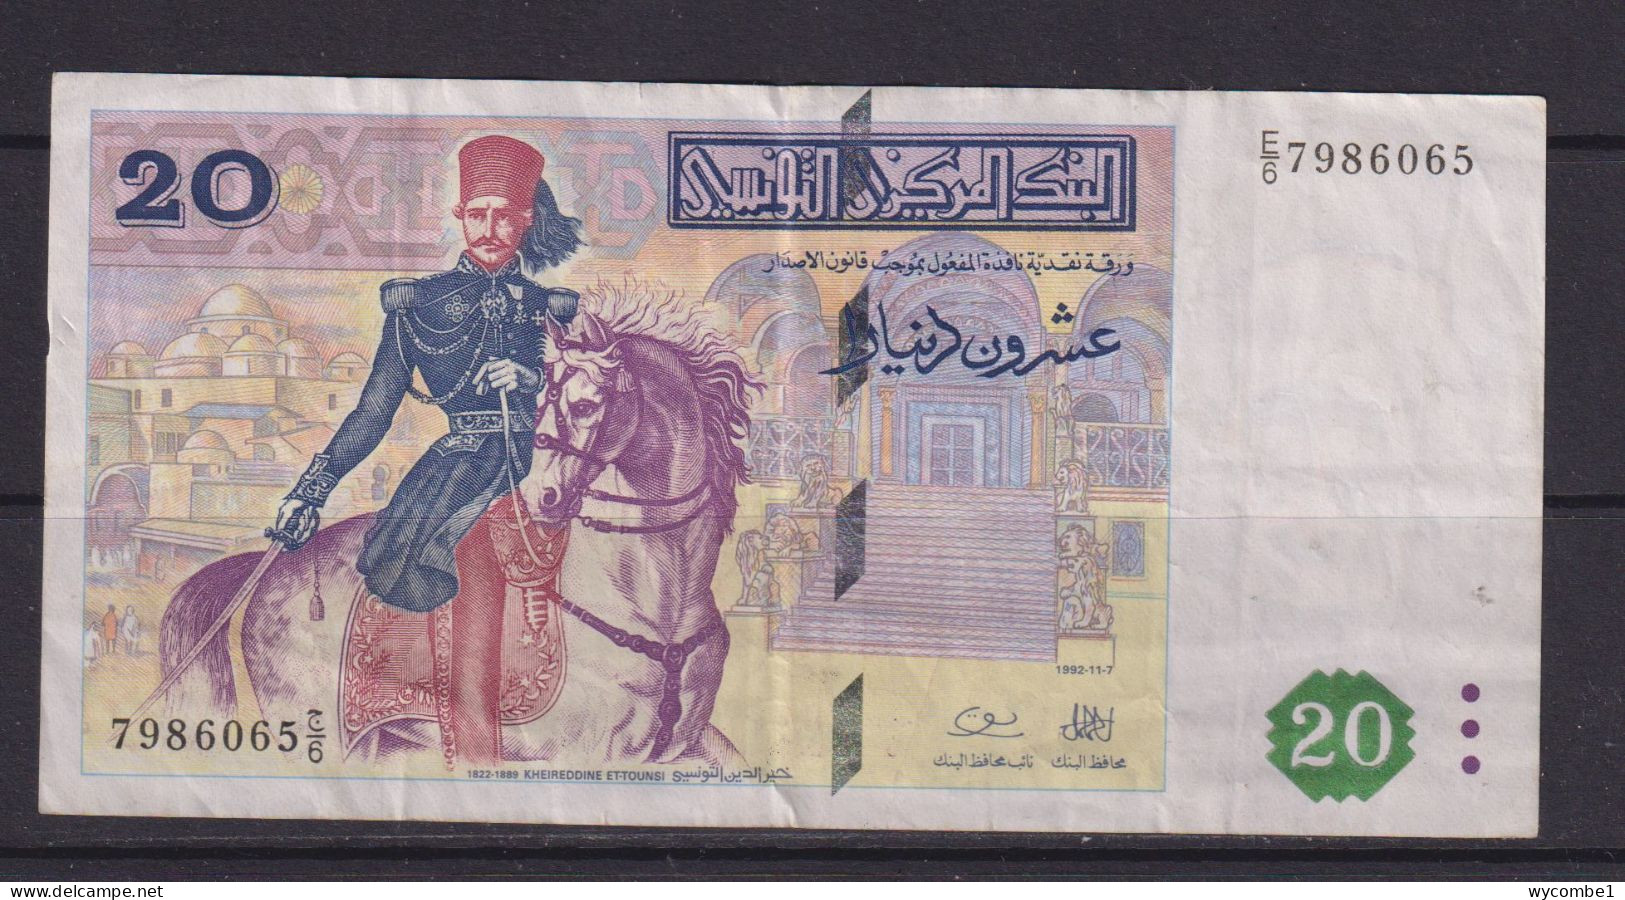 TUNISIA - 1992 20 Dinars Circulated Banknote - Tunisia